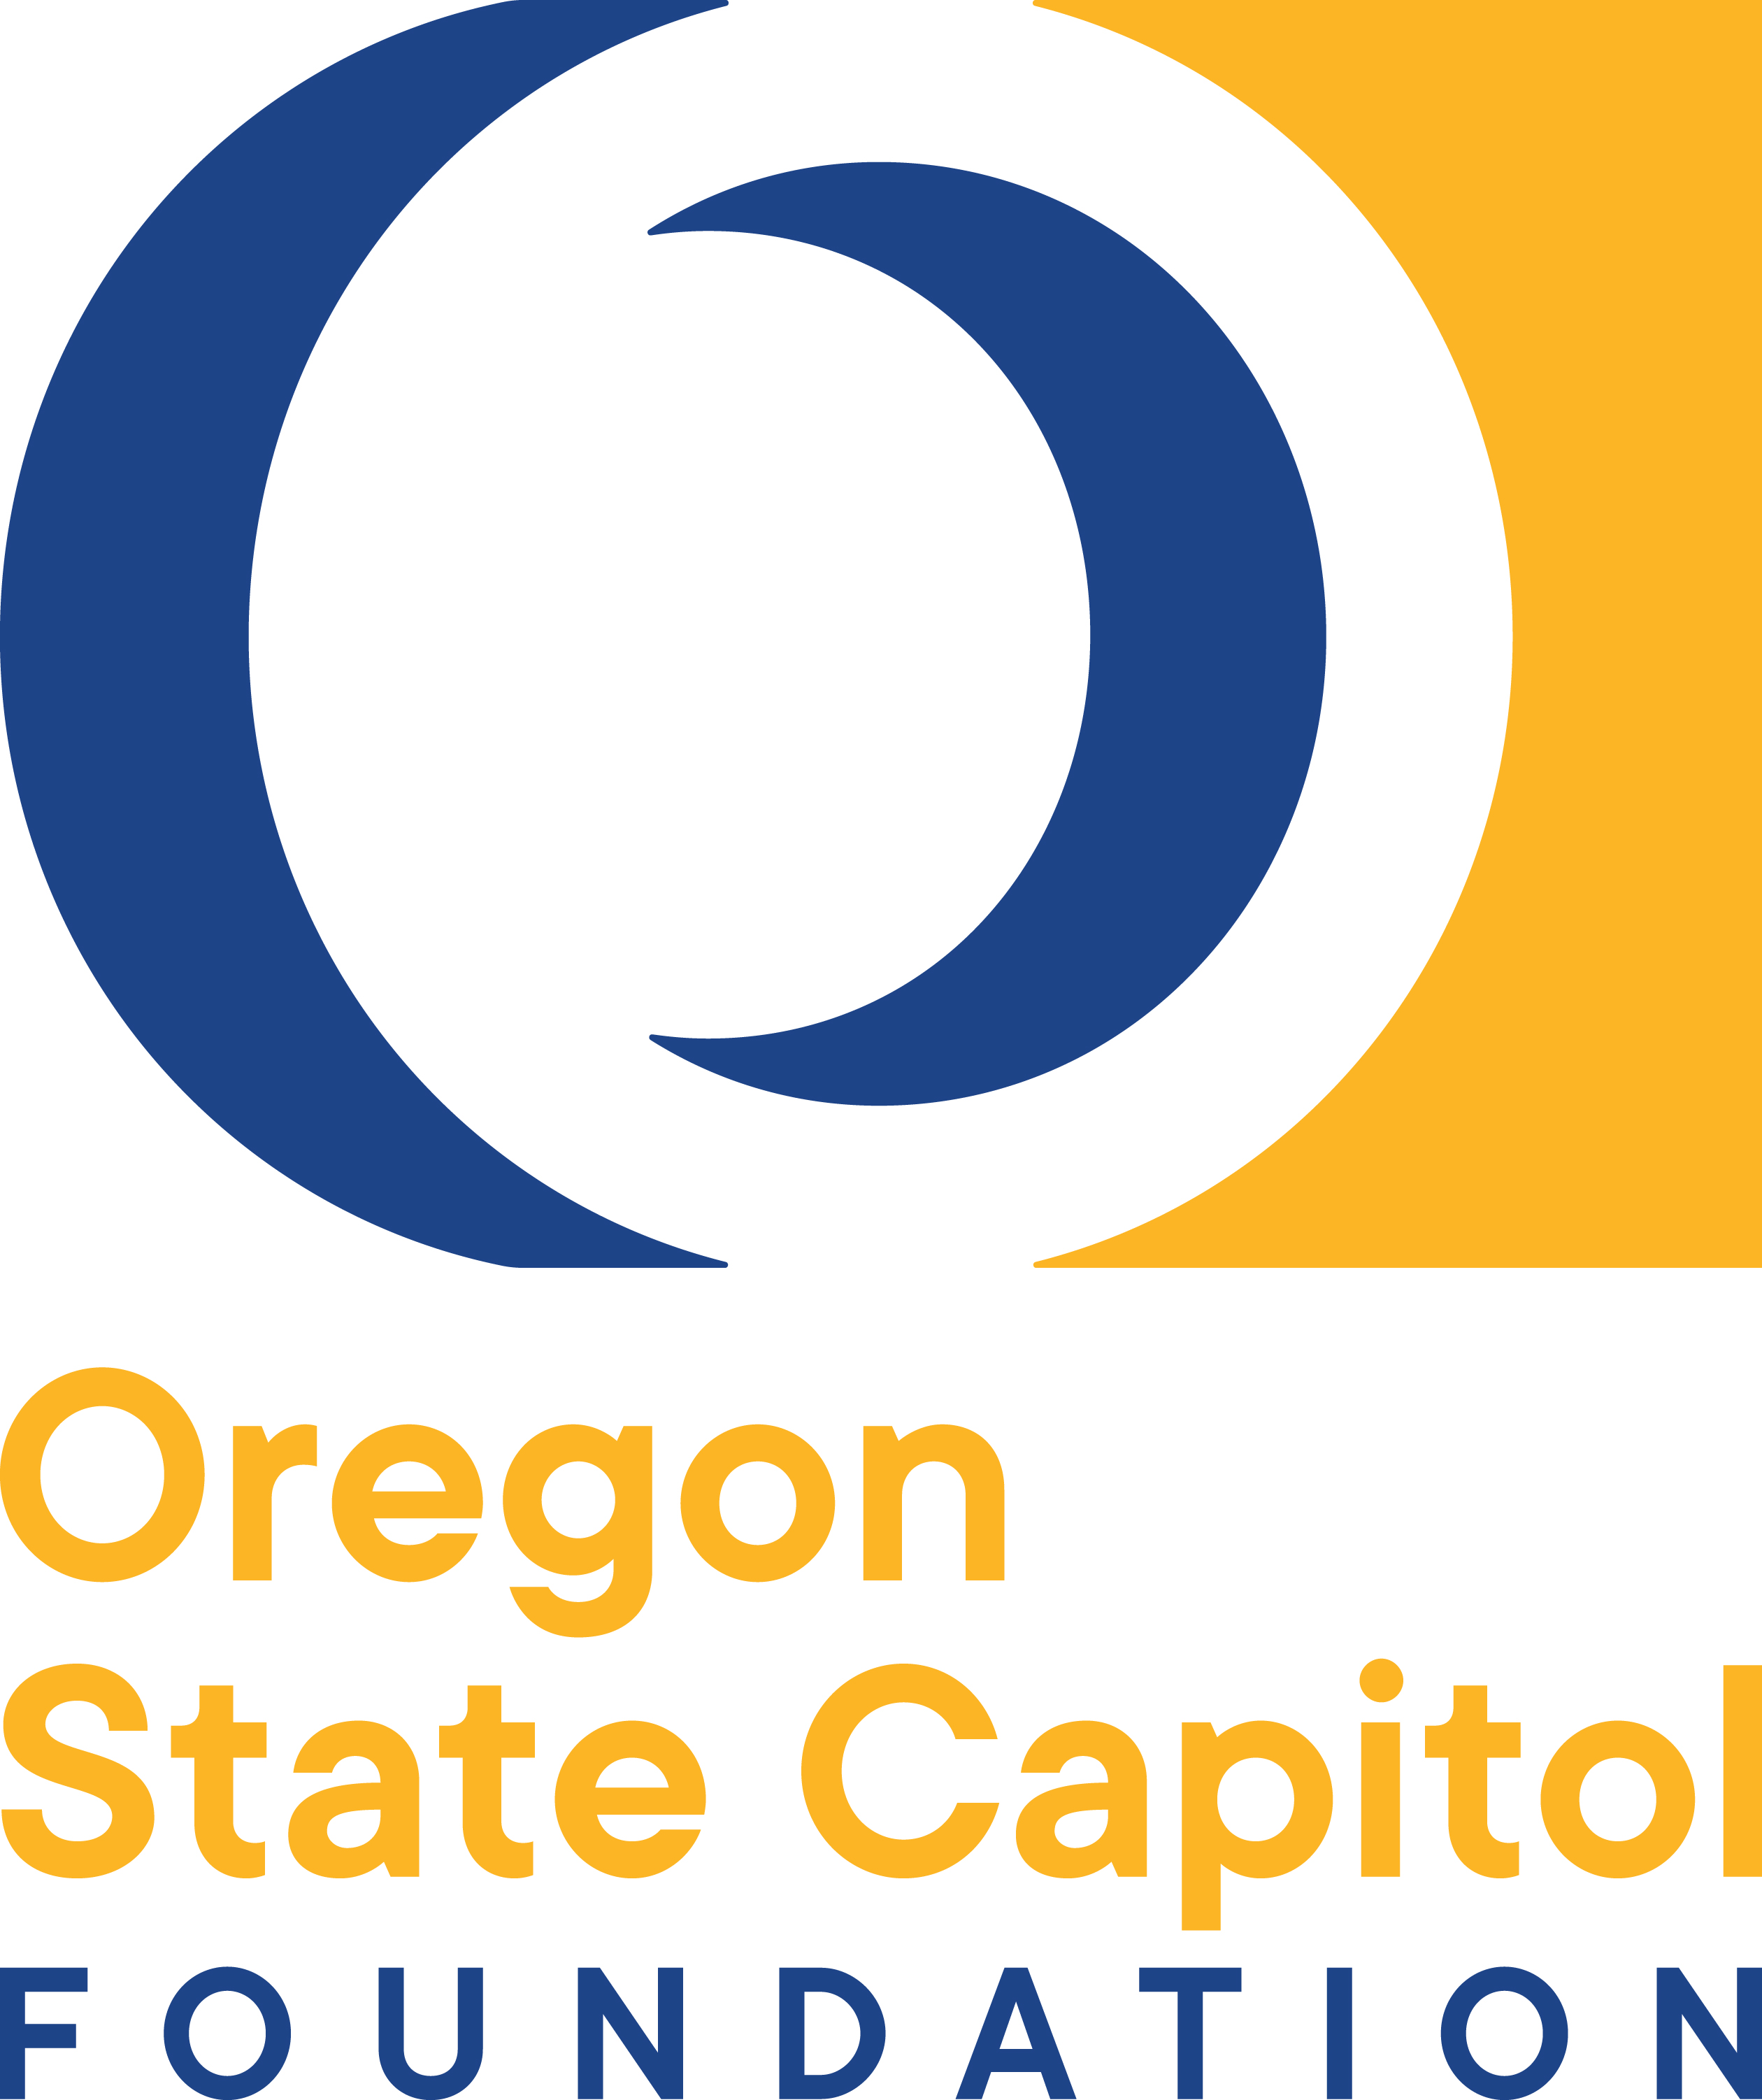 Oregon State Capitol Foundation